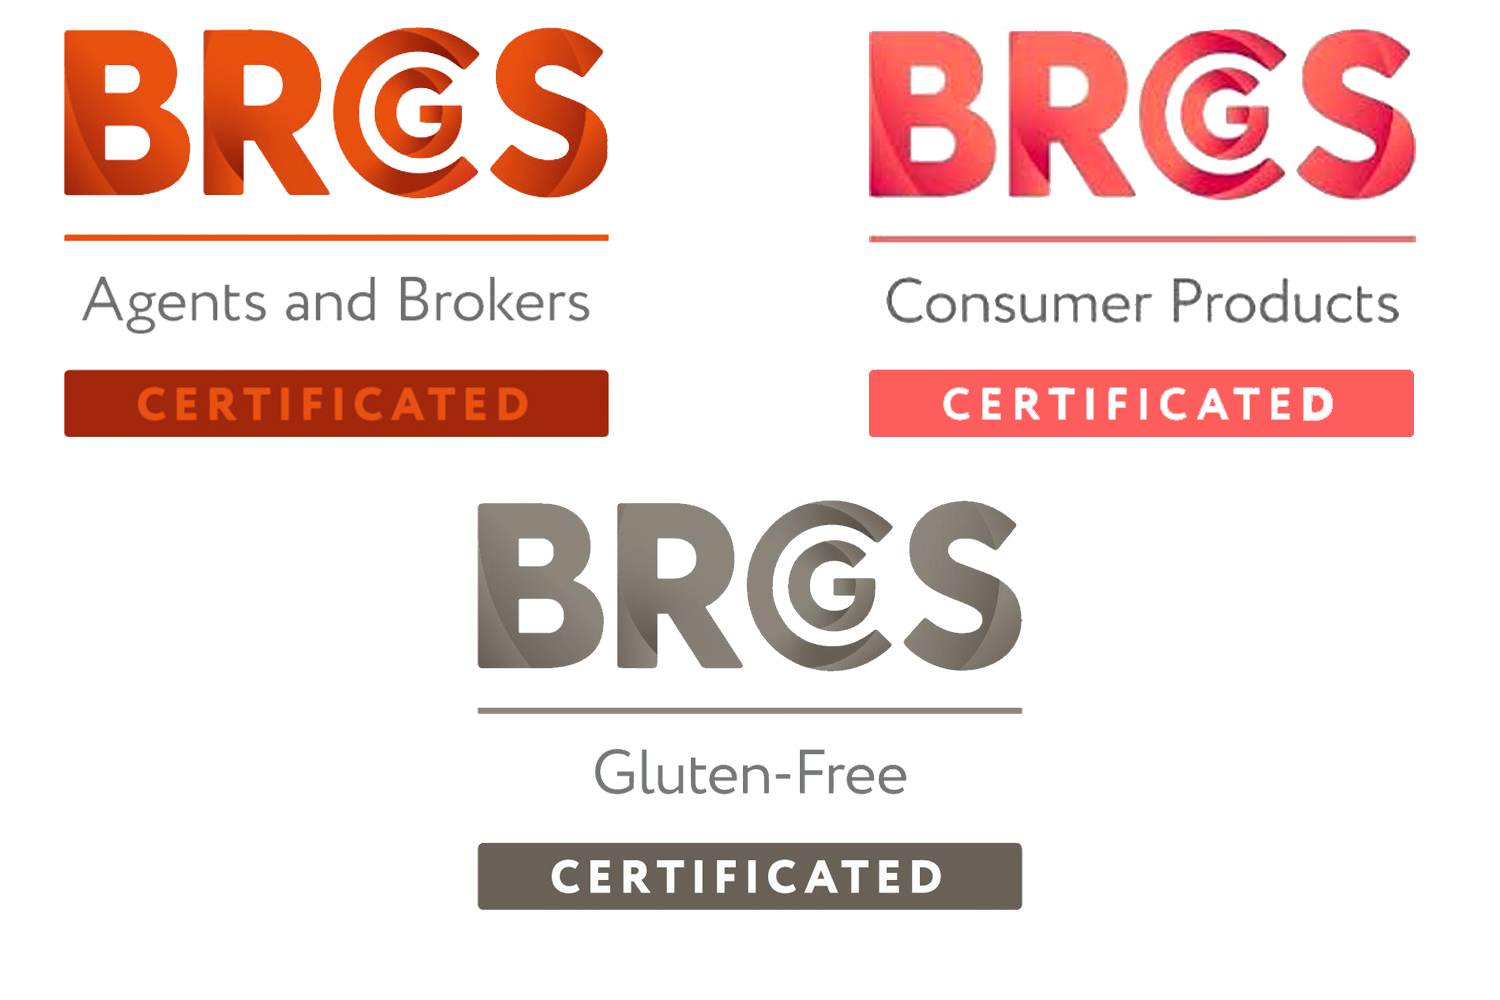 BRCGS Certification